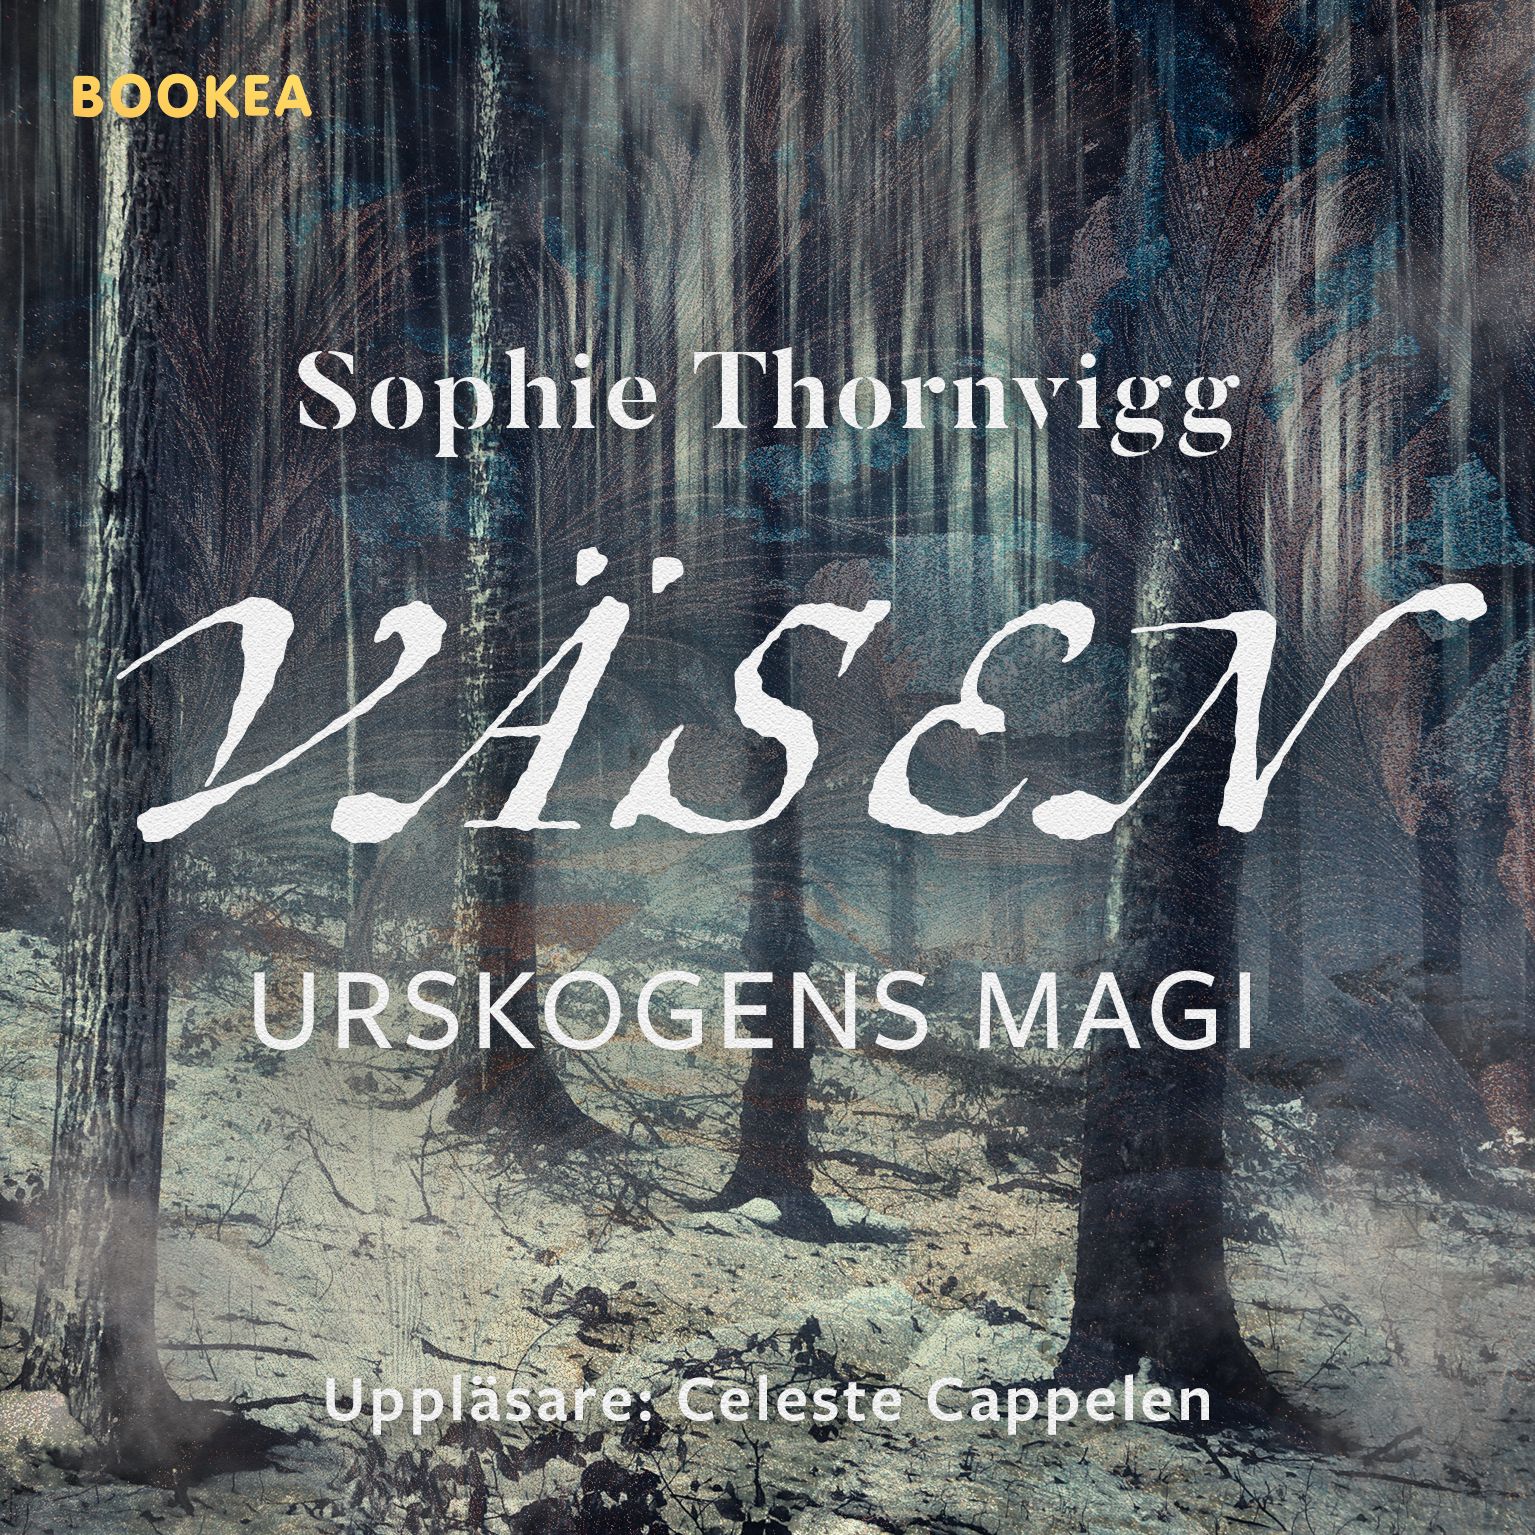 Väsen, audiobook by Sophie Thornvigg